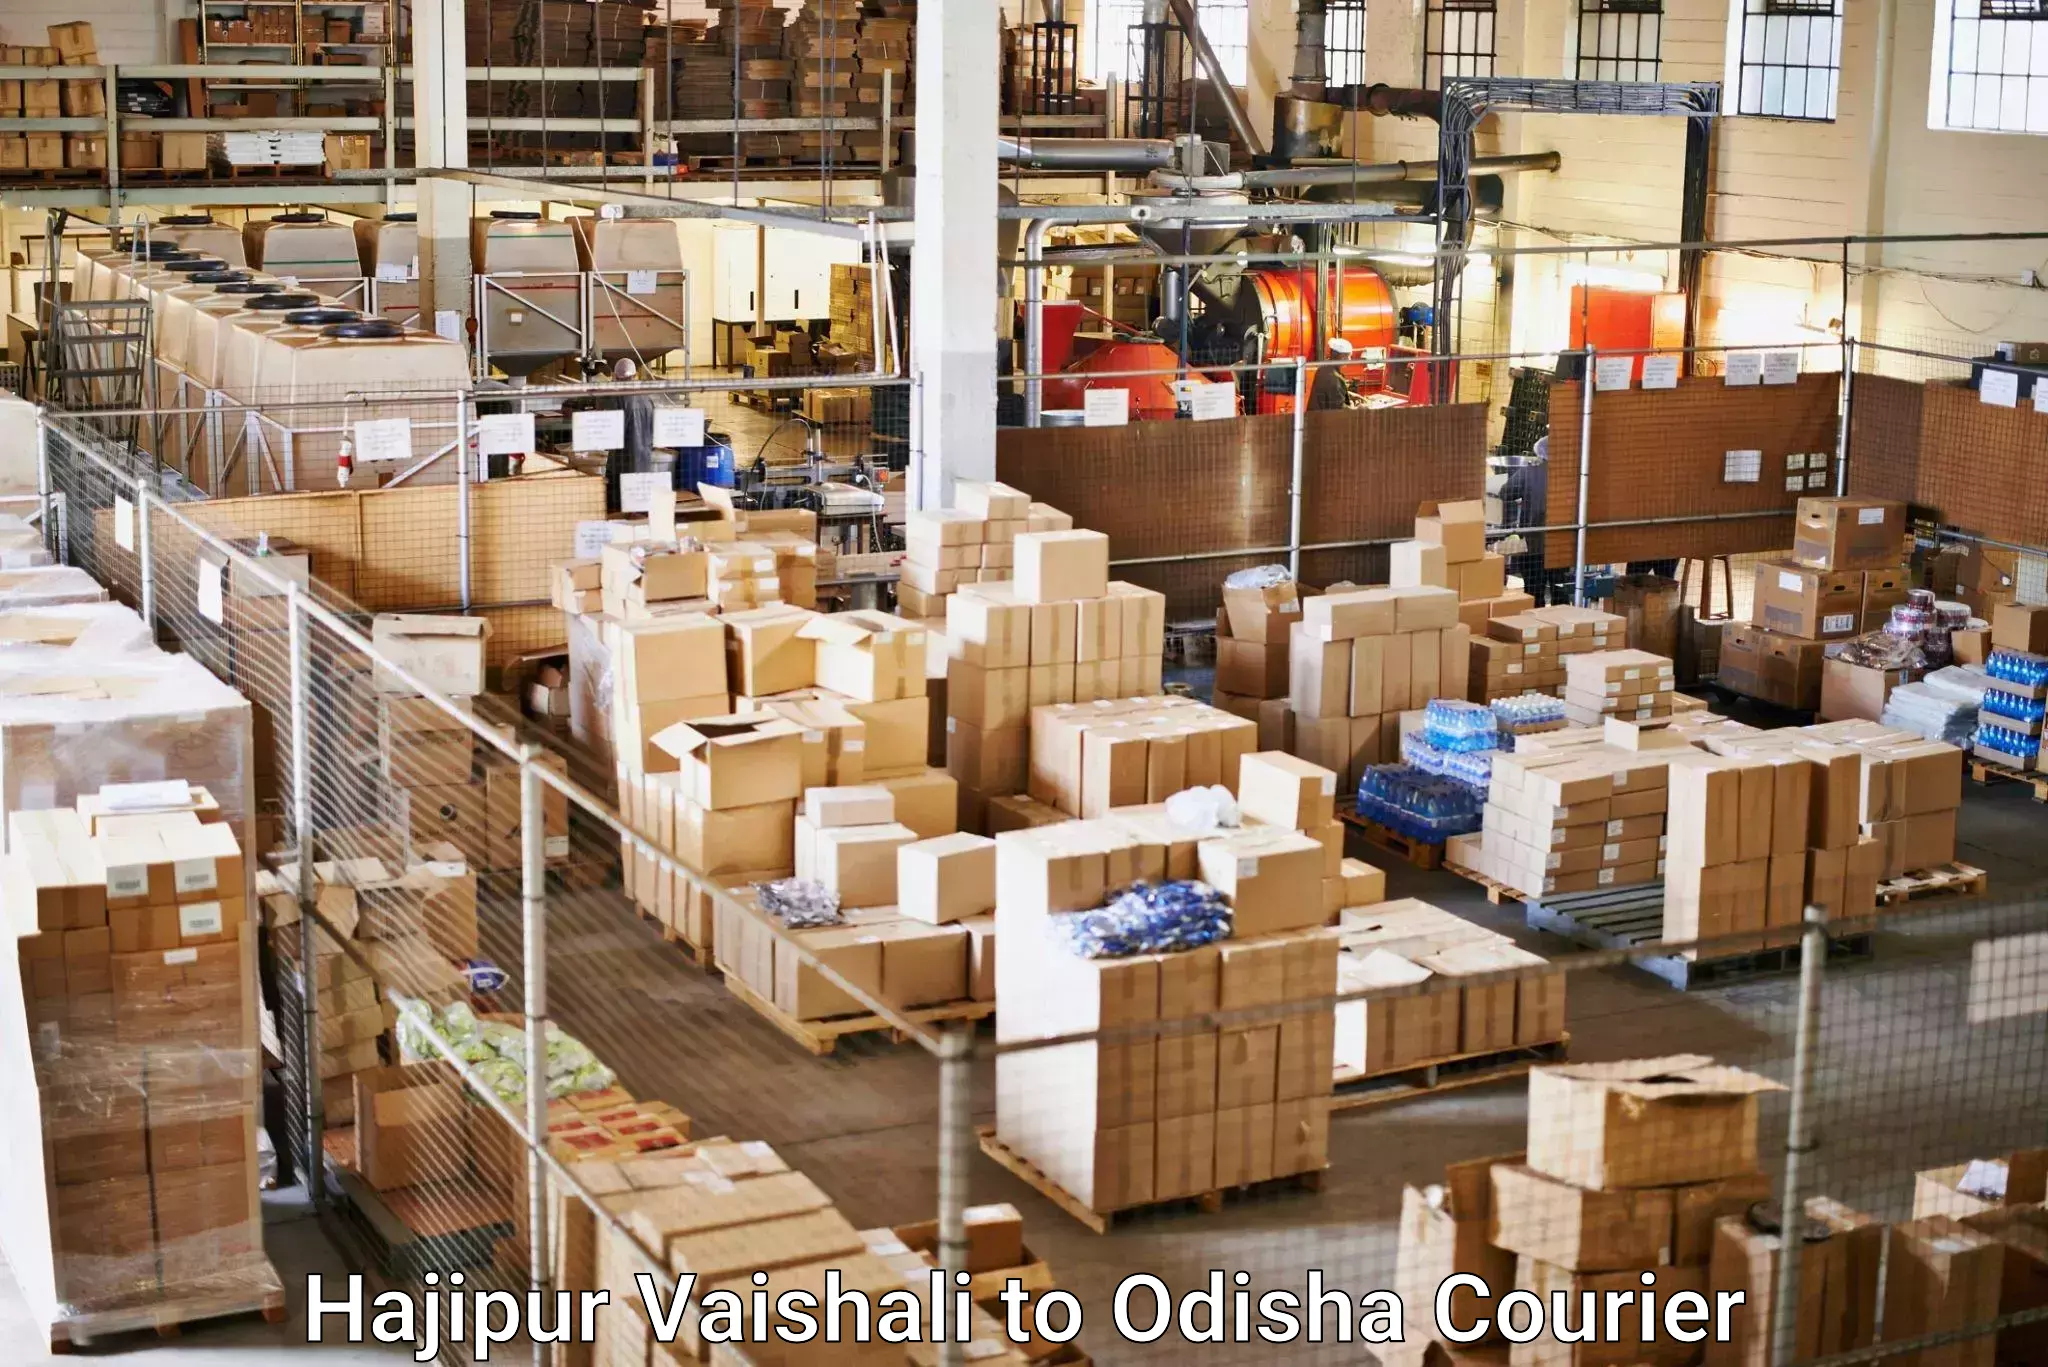 Reliable delivery network Hajipur Vaishali to Bhutasarasingi